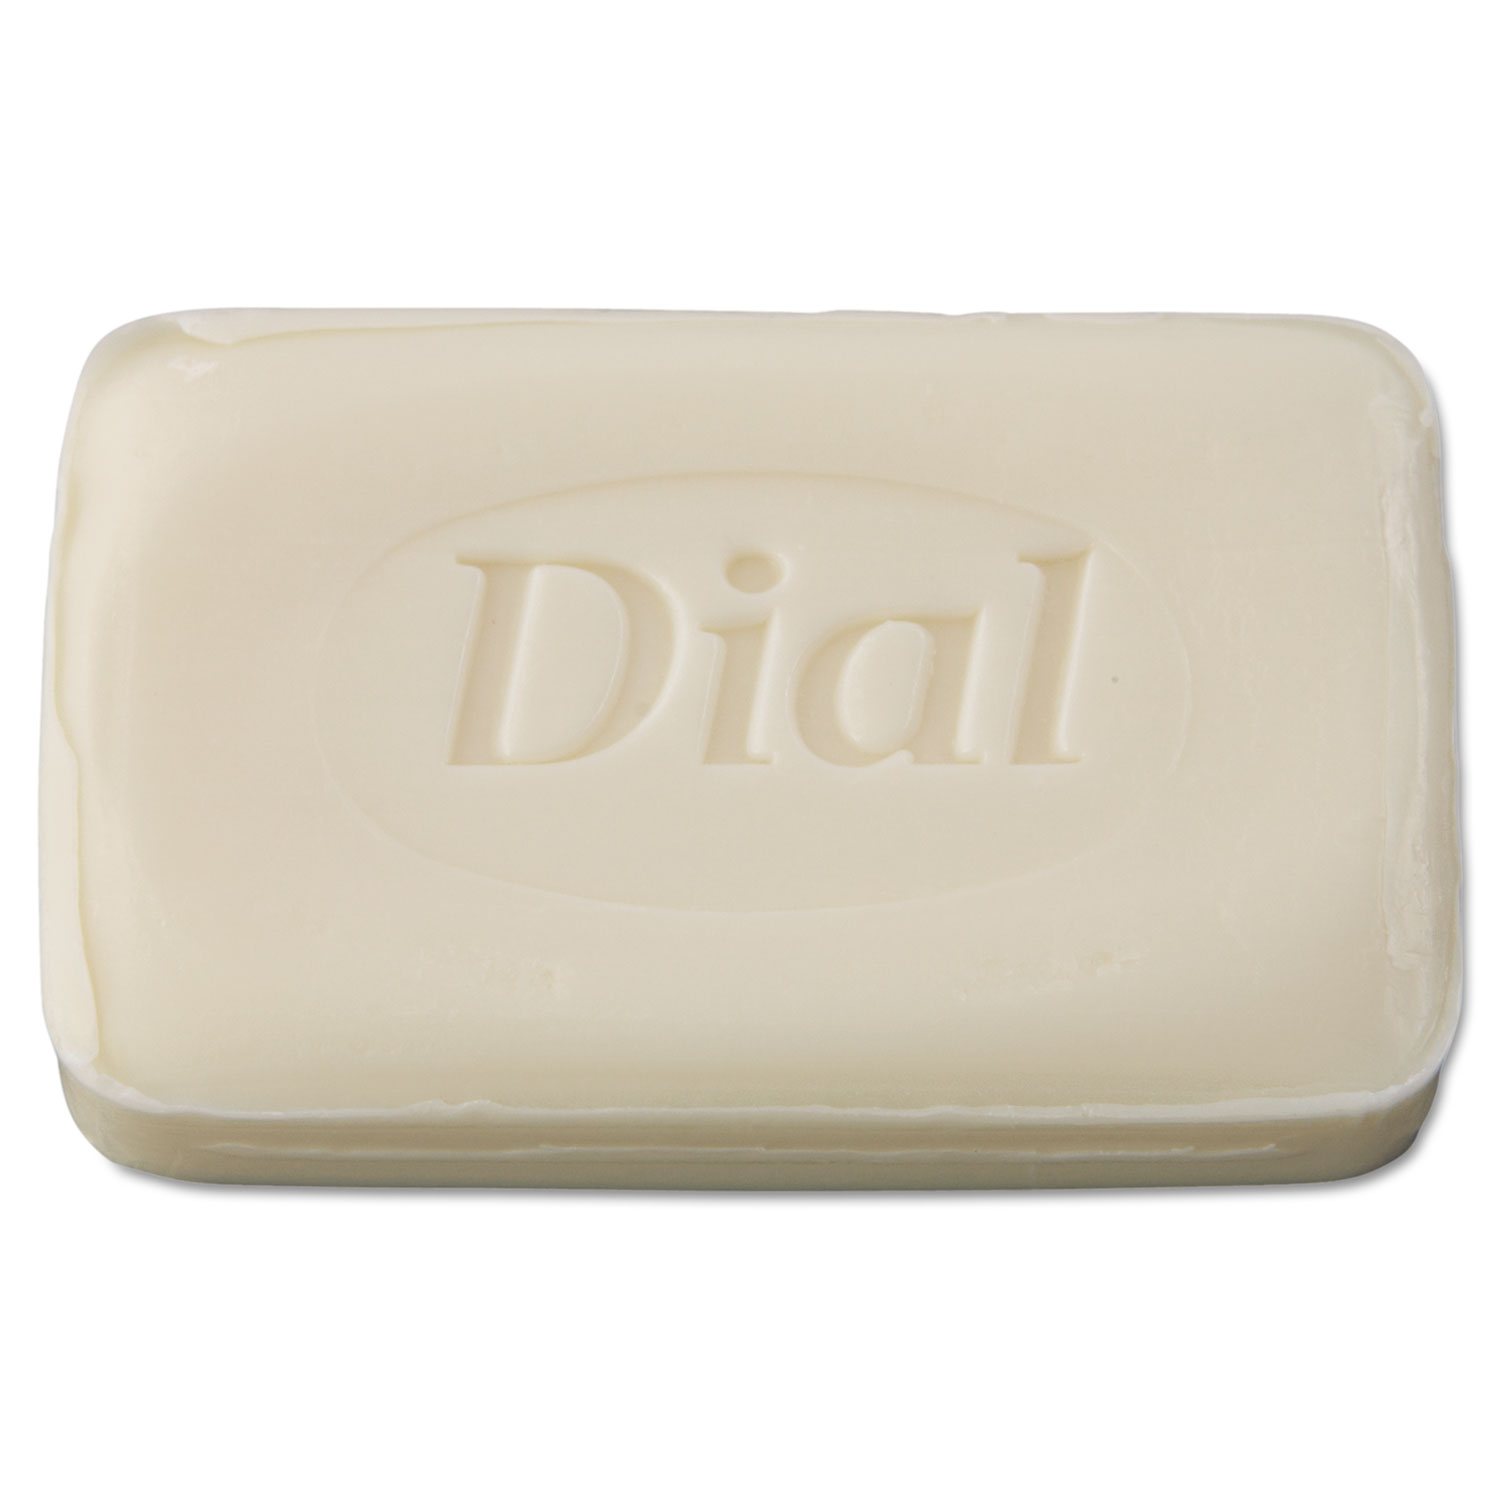 Individually Wrapped Deodorant Bar Soap, White, # 3 Bar, 200/Carton